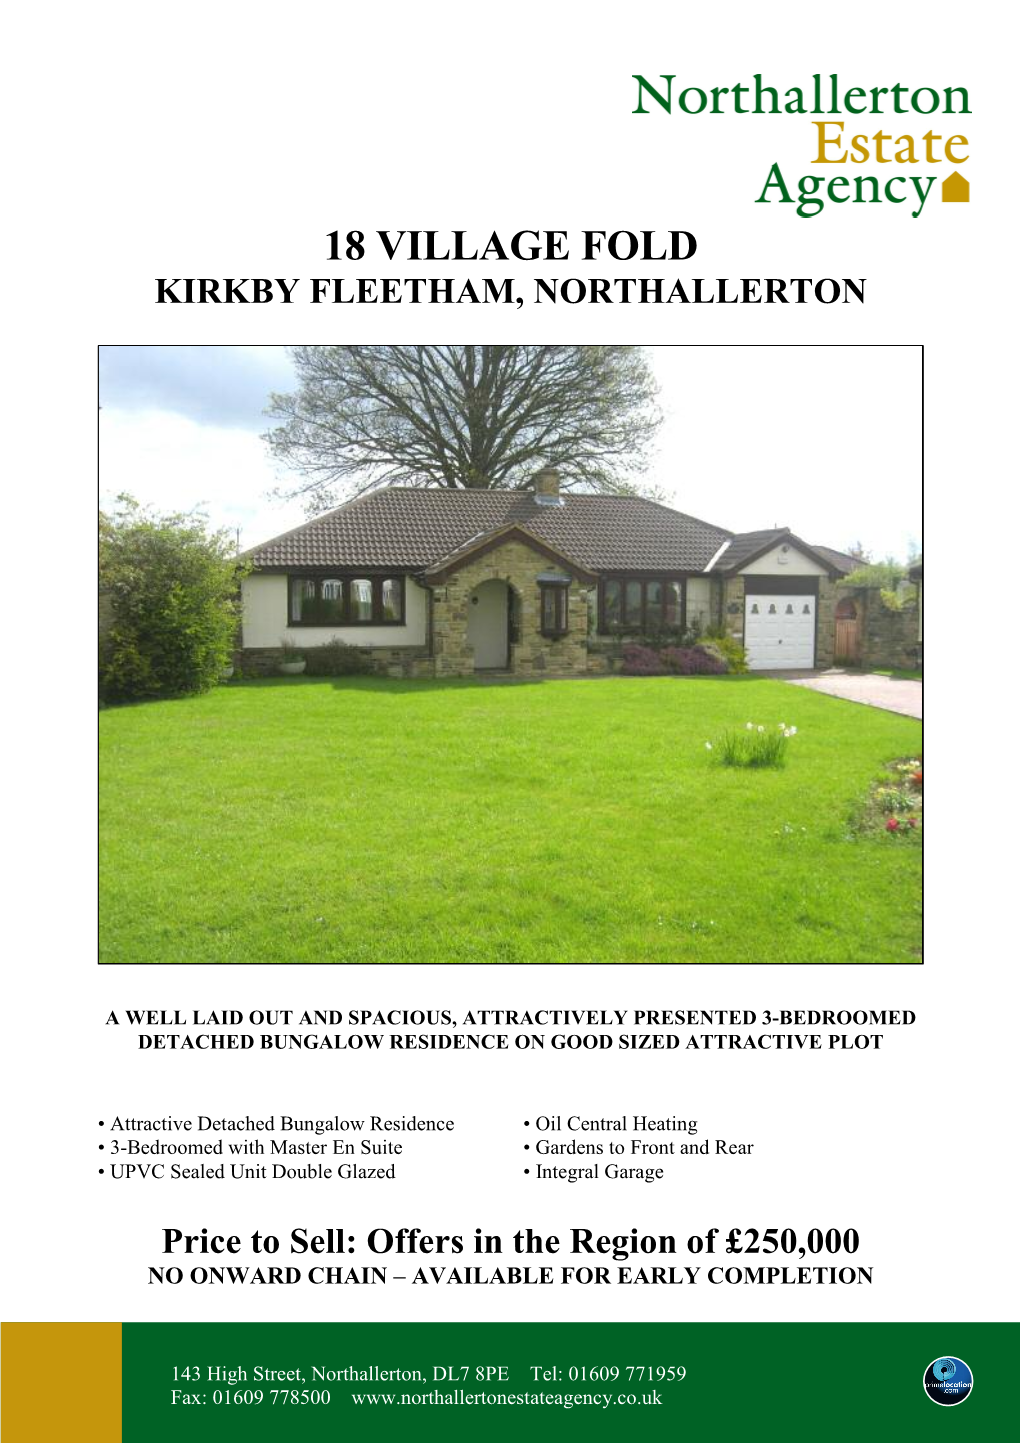 18 Village Fold Kirkby Fleetham, Northallerton